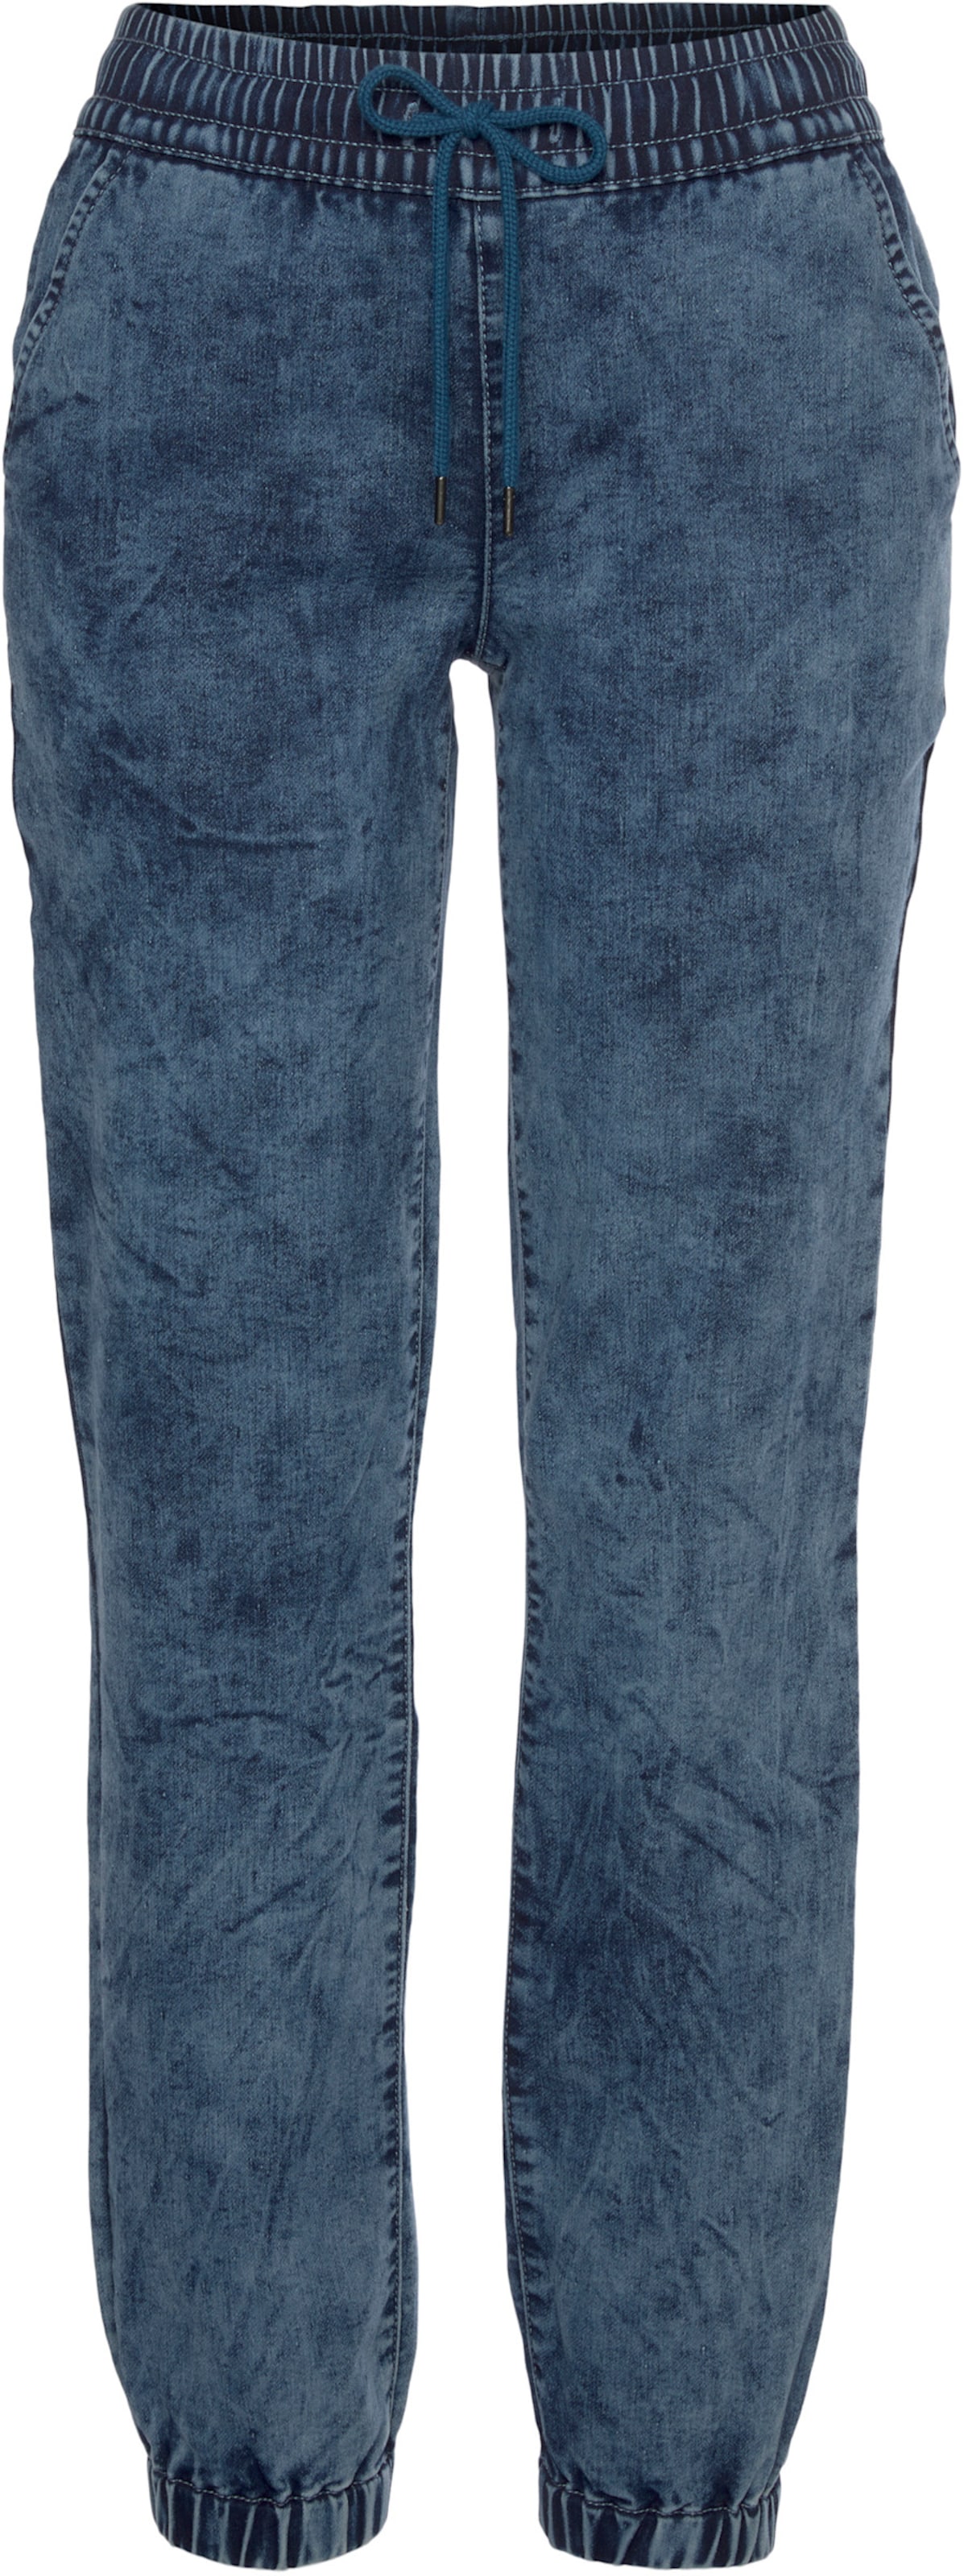 Jogger Pants in dunkelblau-moonwashed von H.I.S